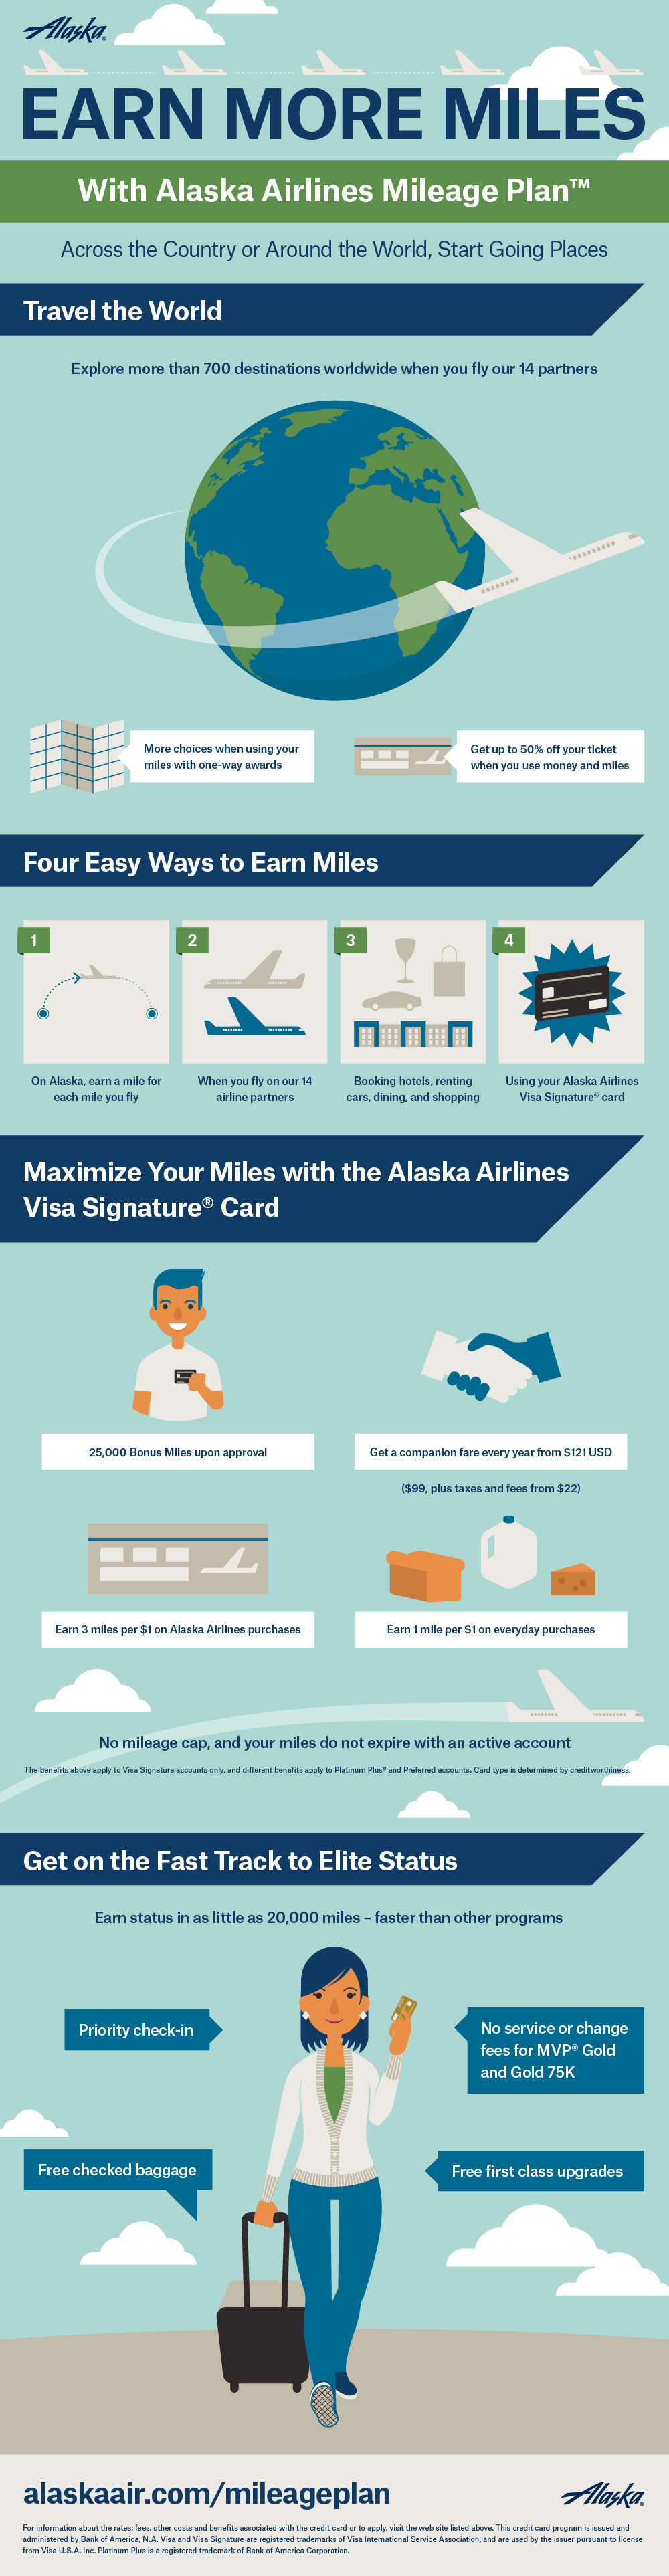 Alaska-Air-Mileage-Plan-2-18-15